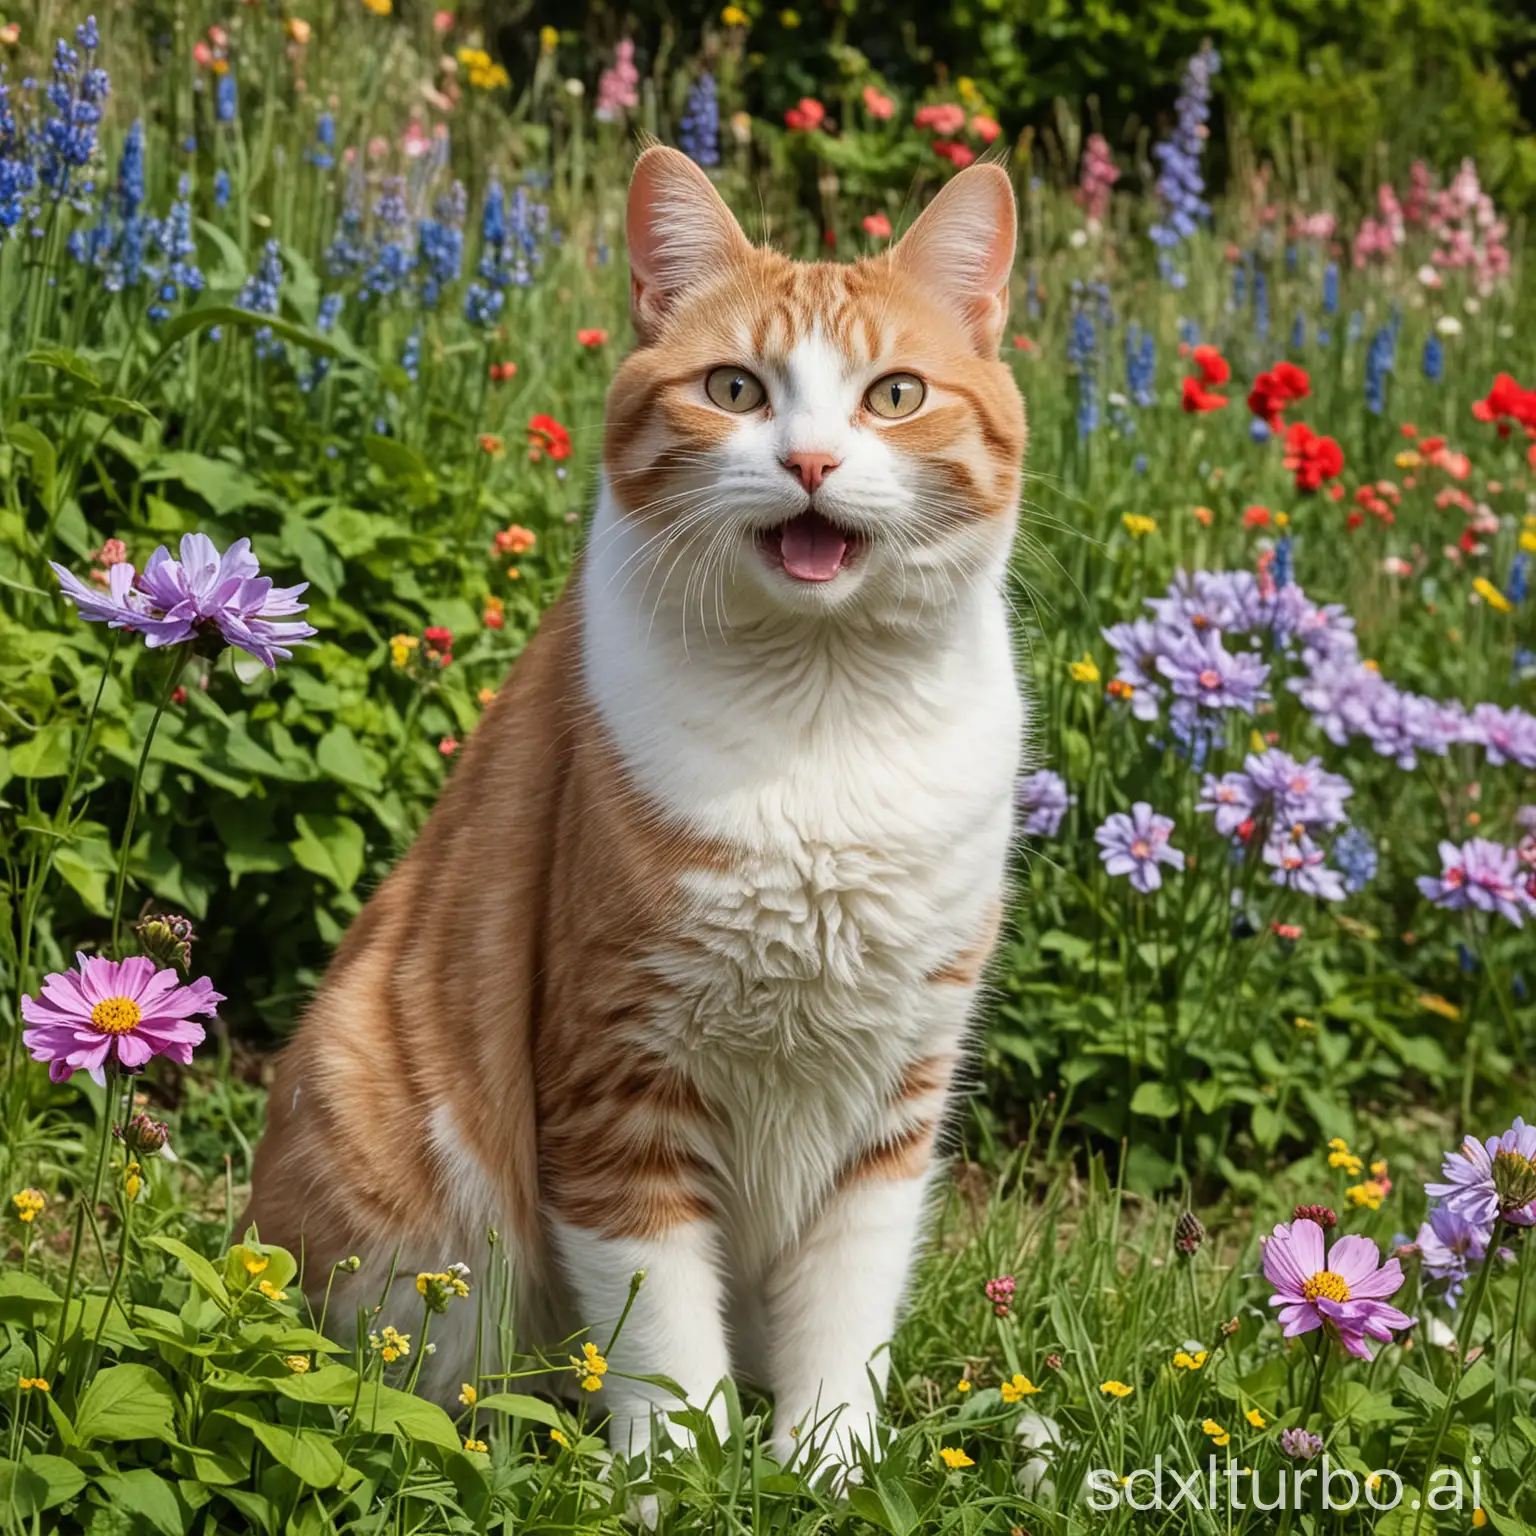 Happy three-flowered cat in the garden.
